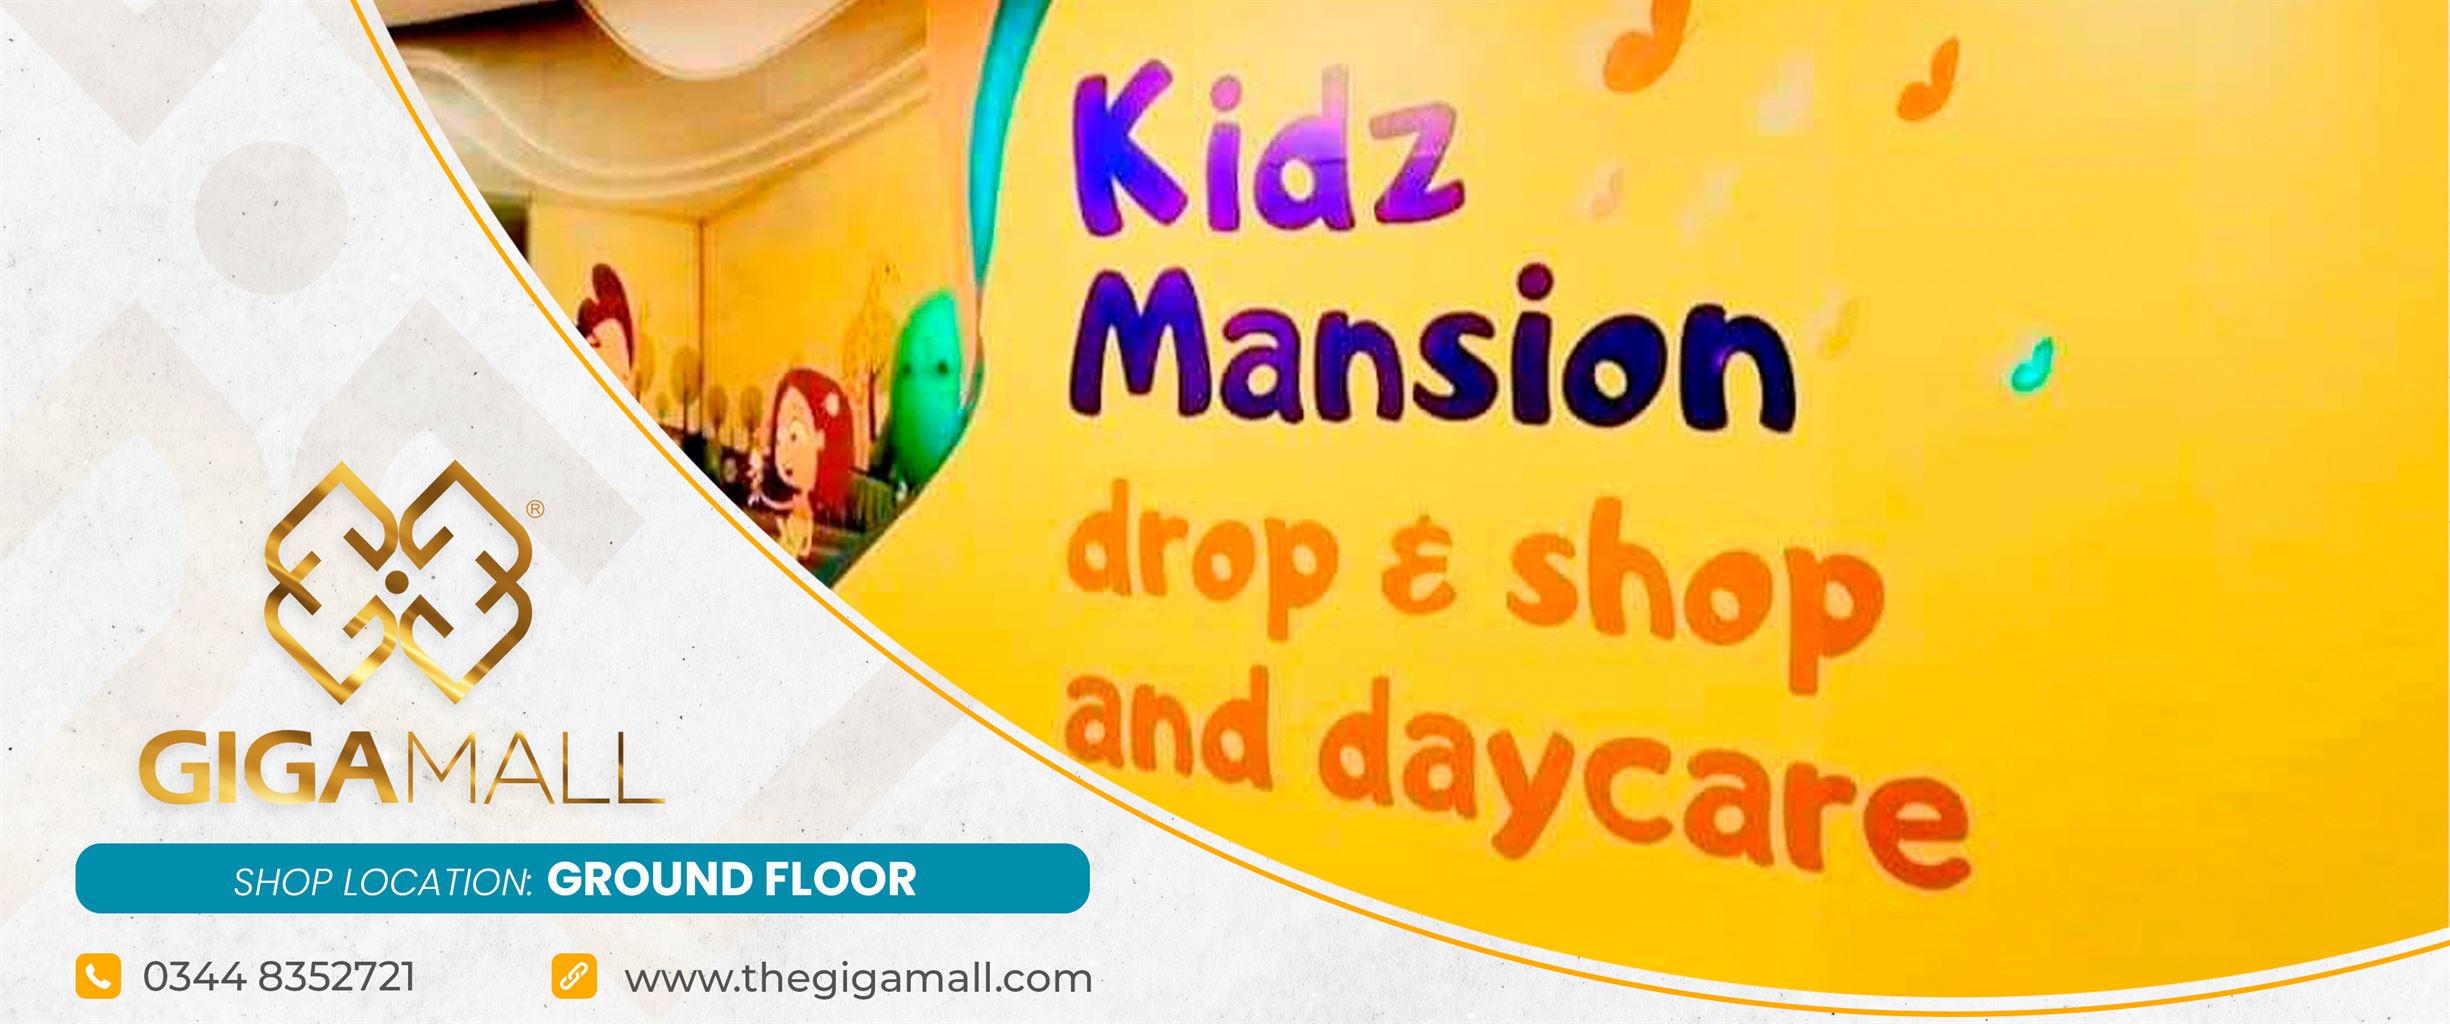 Kidz Mansion